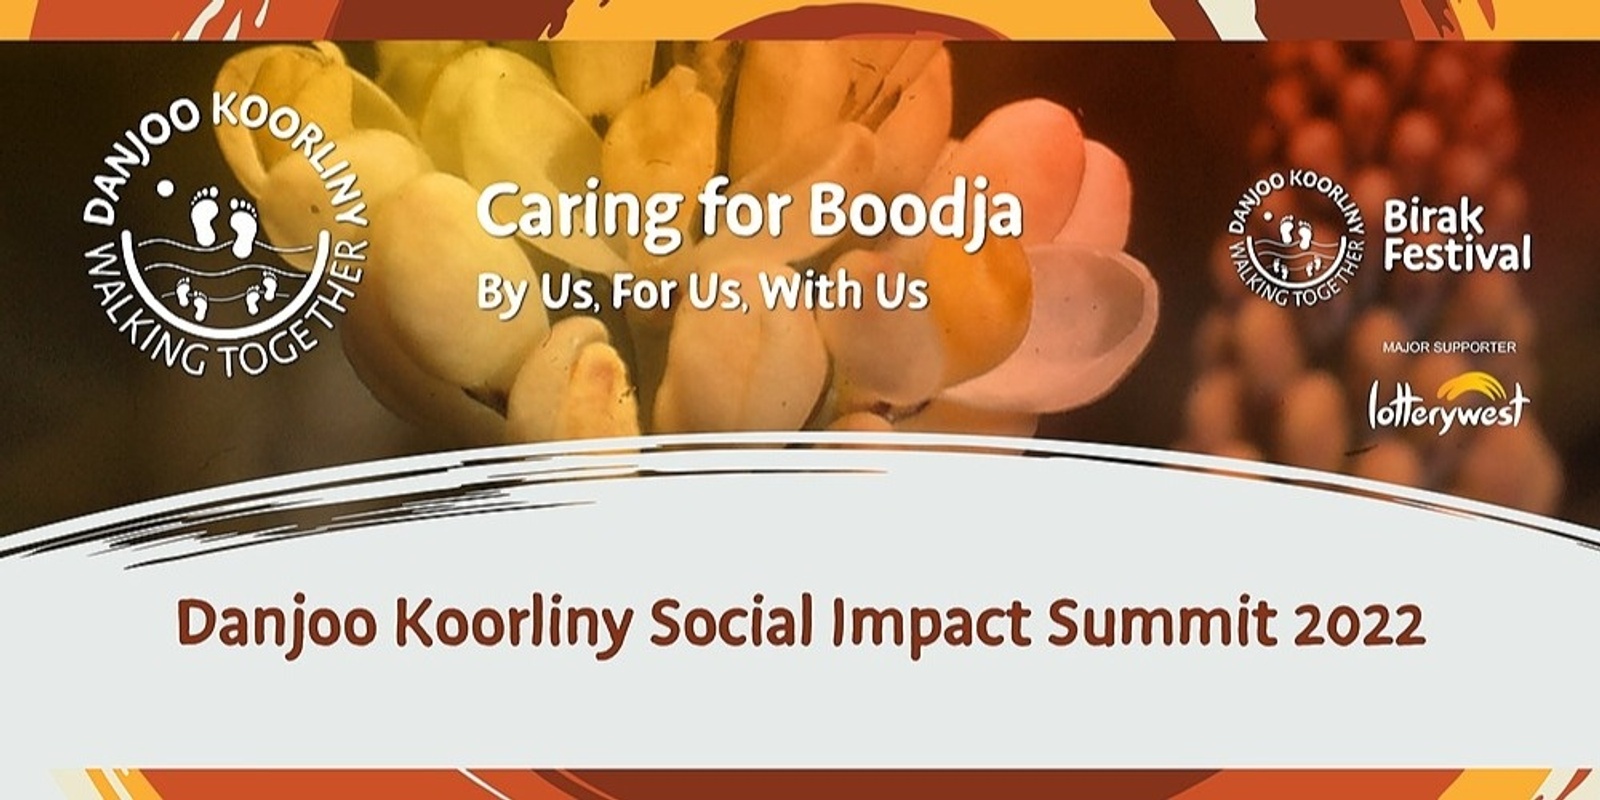 Banner image for Danjoo Koorliny Social Impact Summit 2022